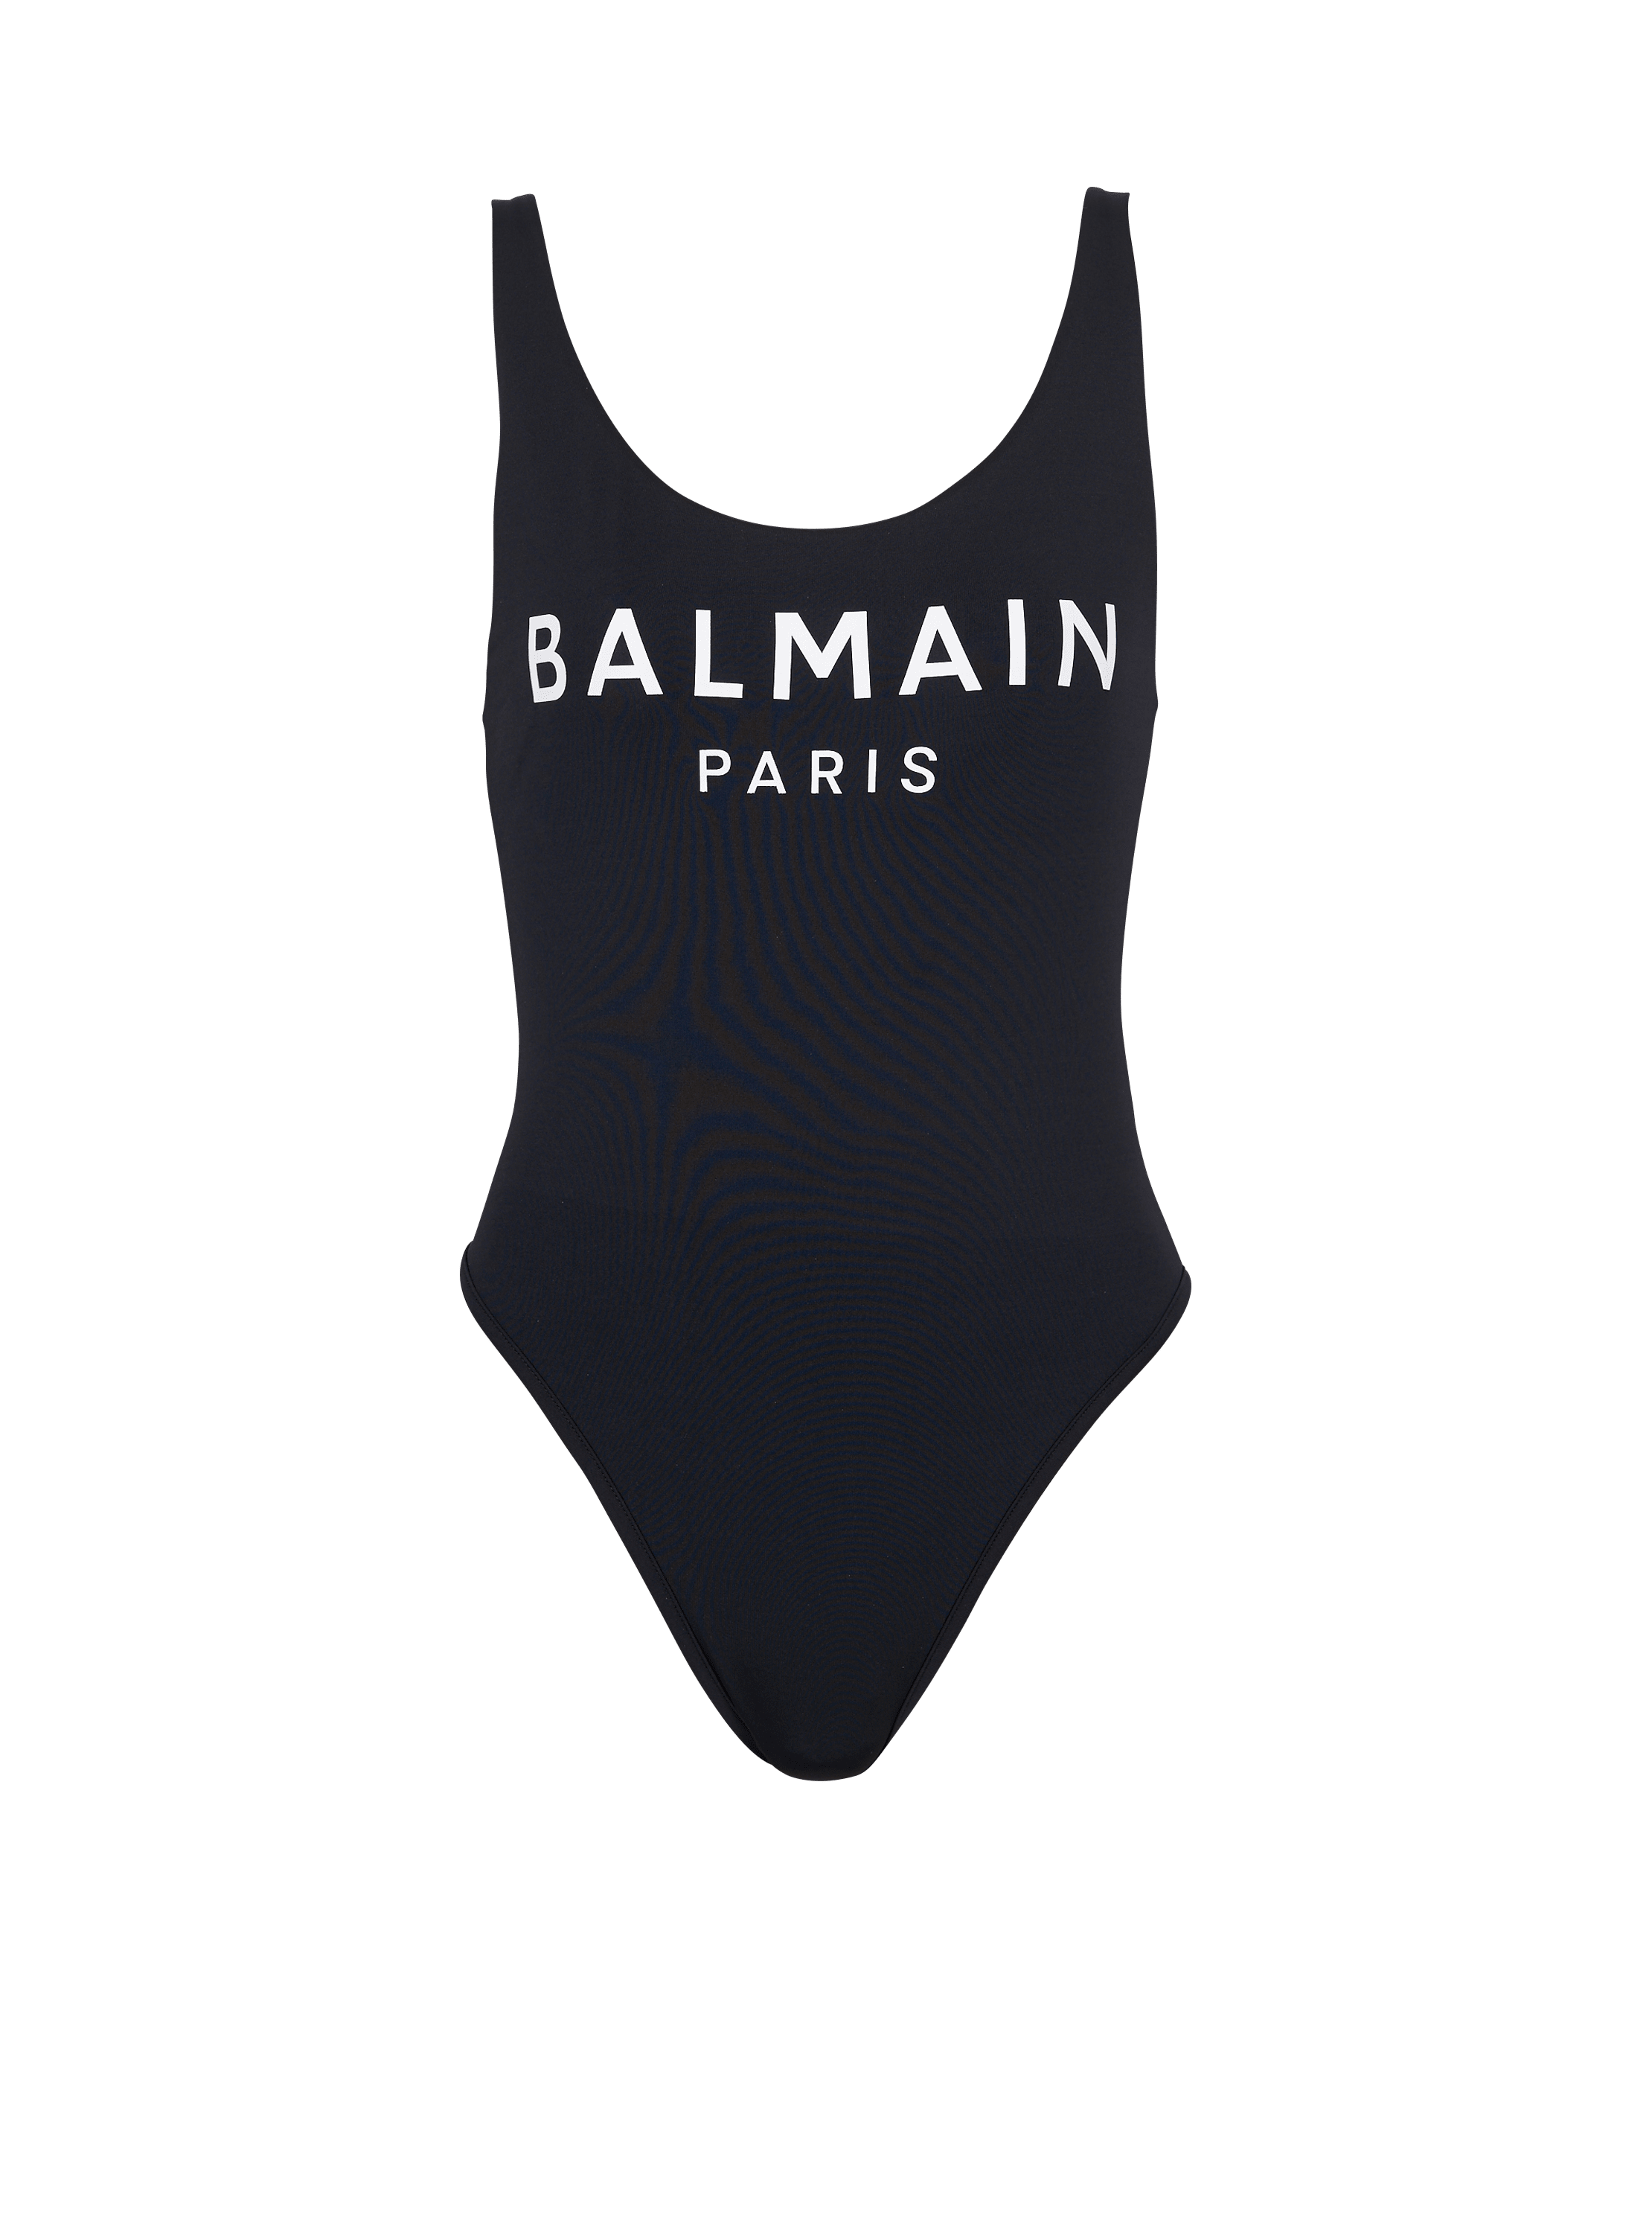 BALMAIN Paris泳衣